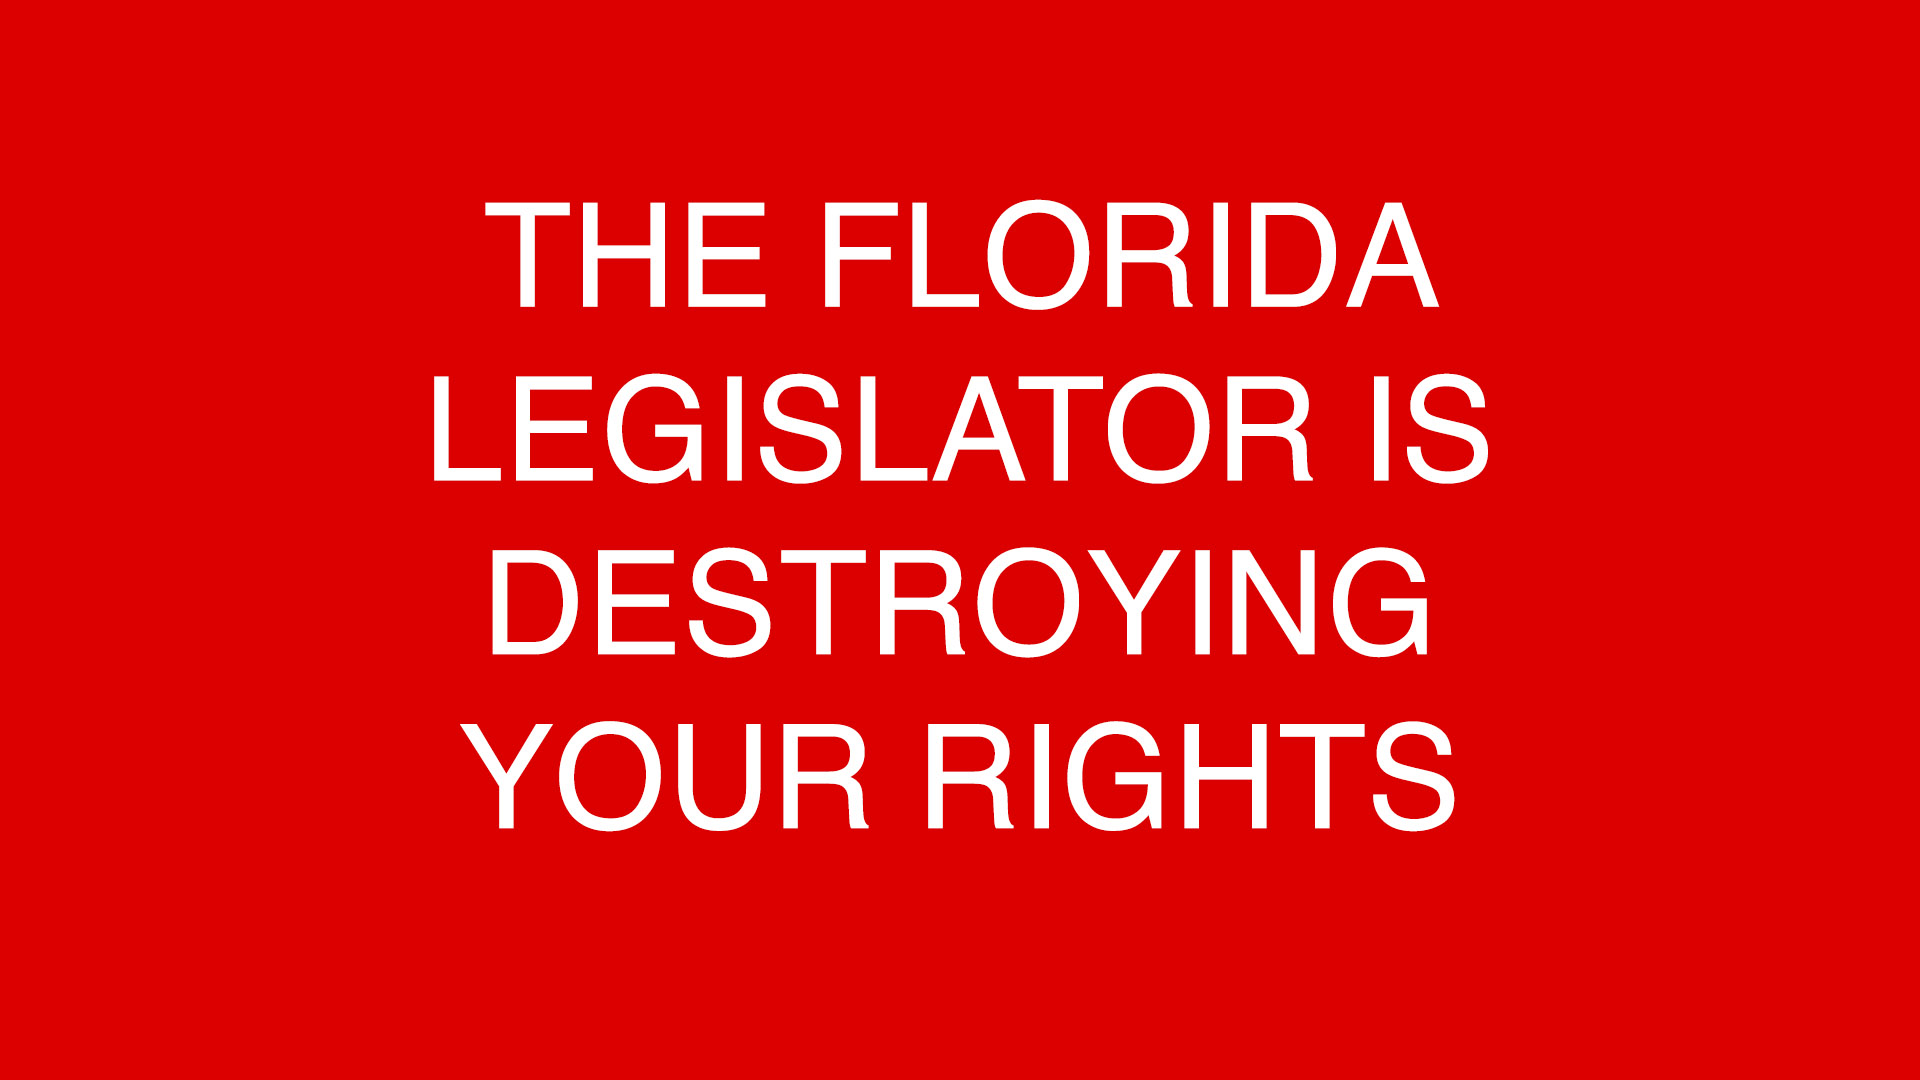 THE FLORIDA LEGISLATOR IS DESTROYING YOUR RIGHTS